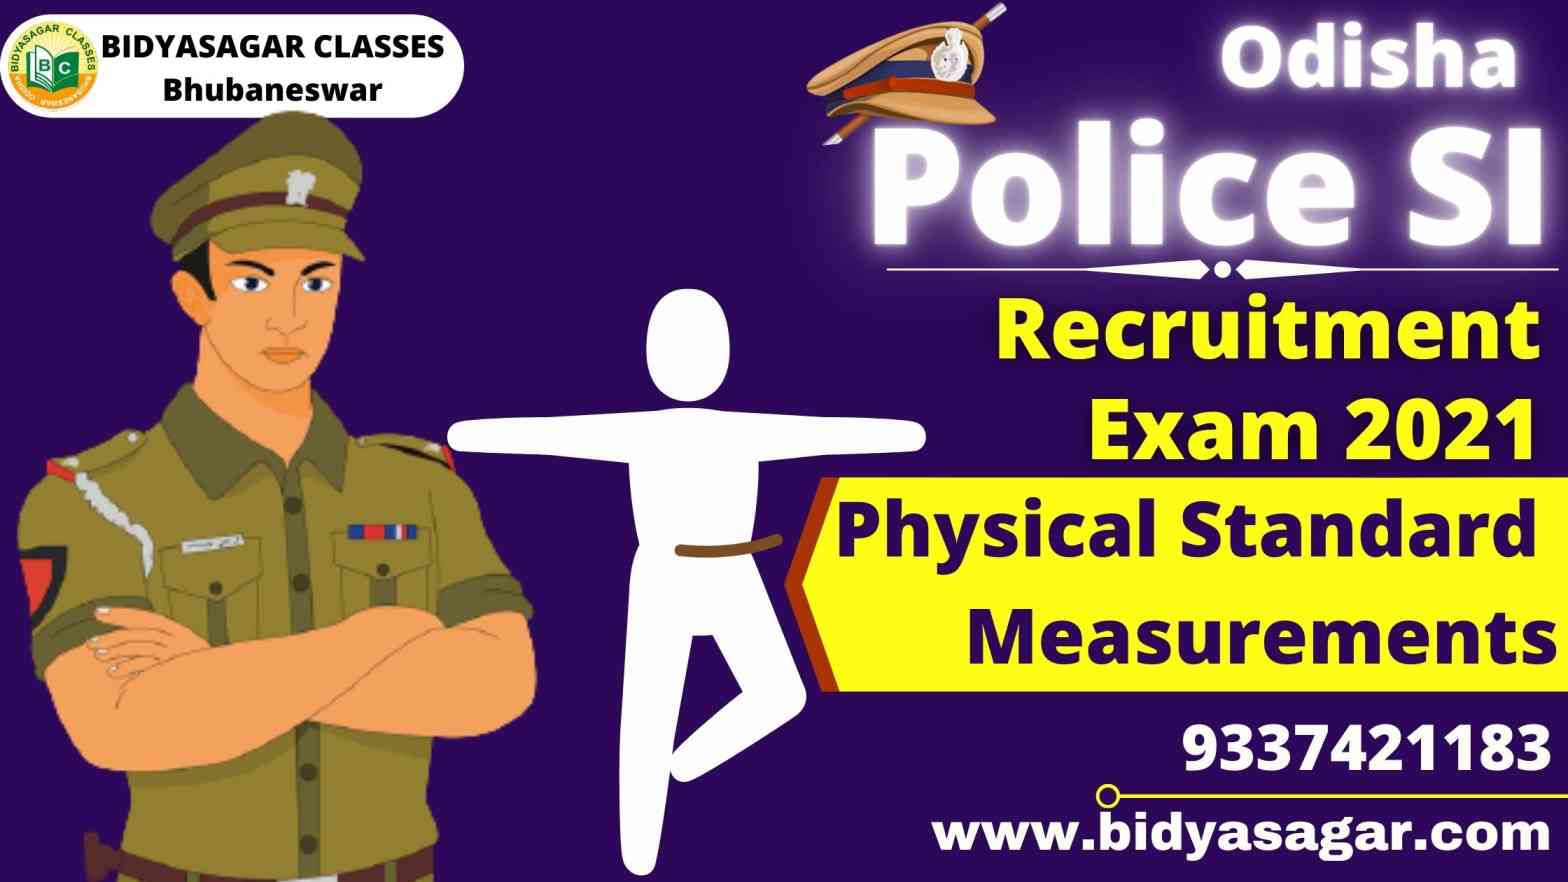 Odisha Police SI Recruitment Exam 2021 Physical Standard Measurements